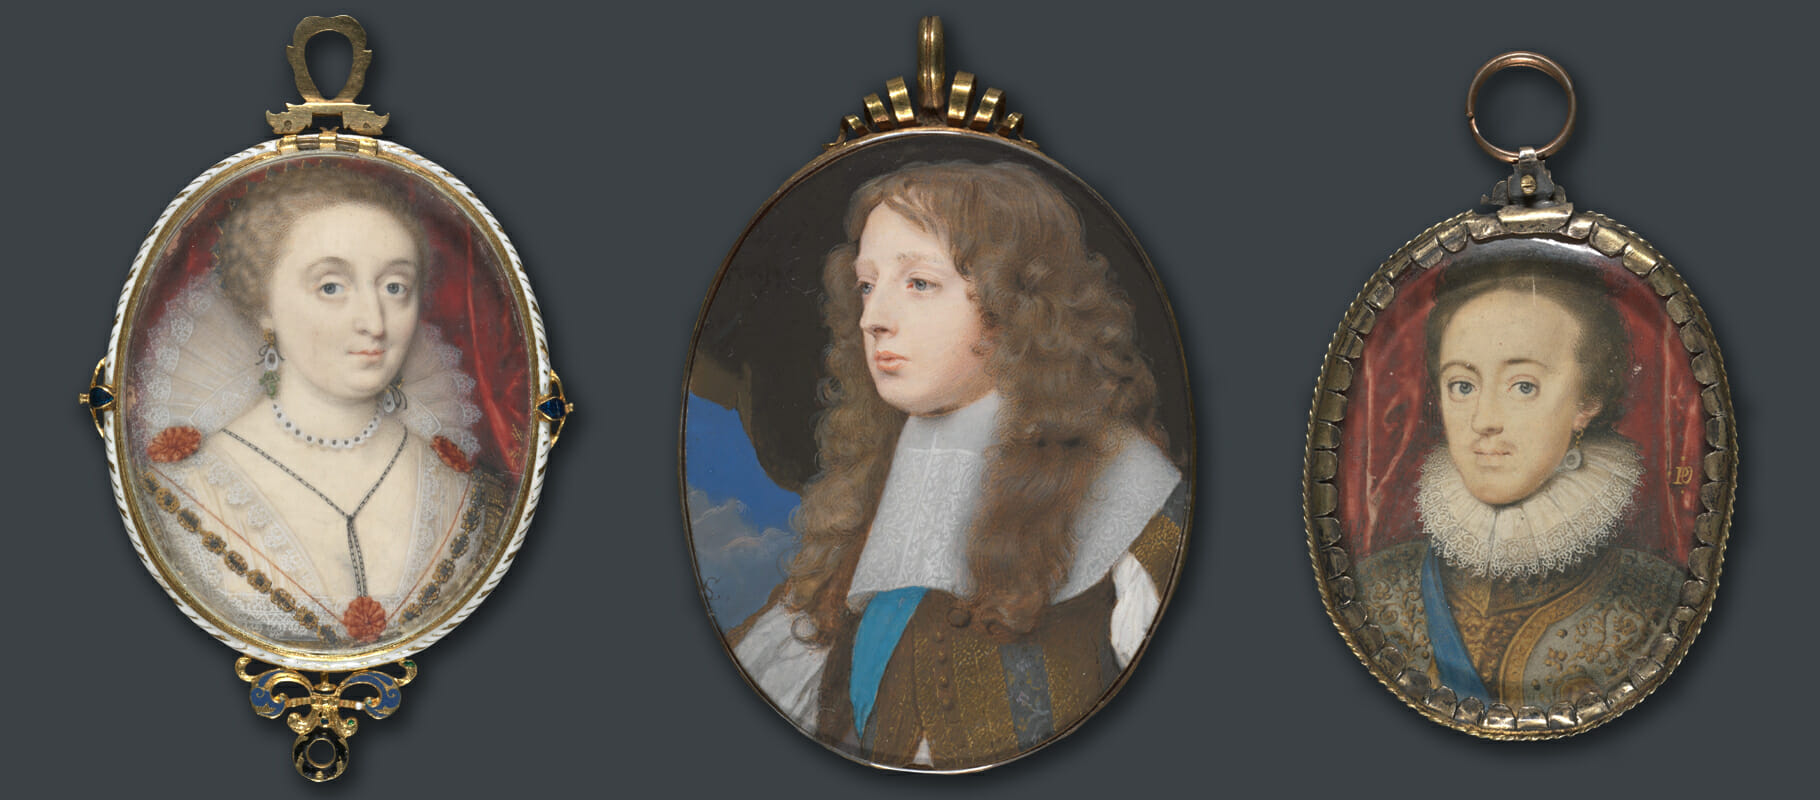 17th century portrait miniatures